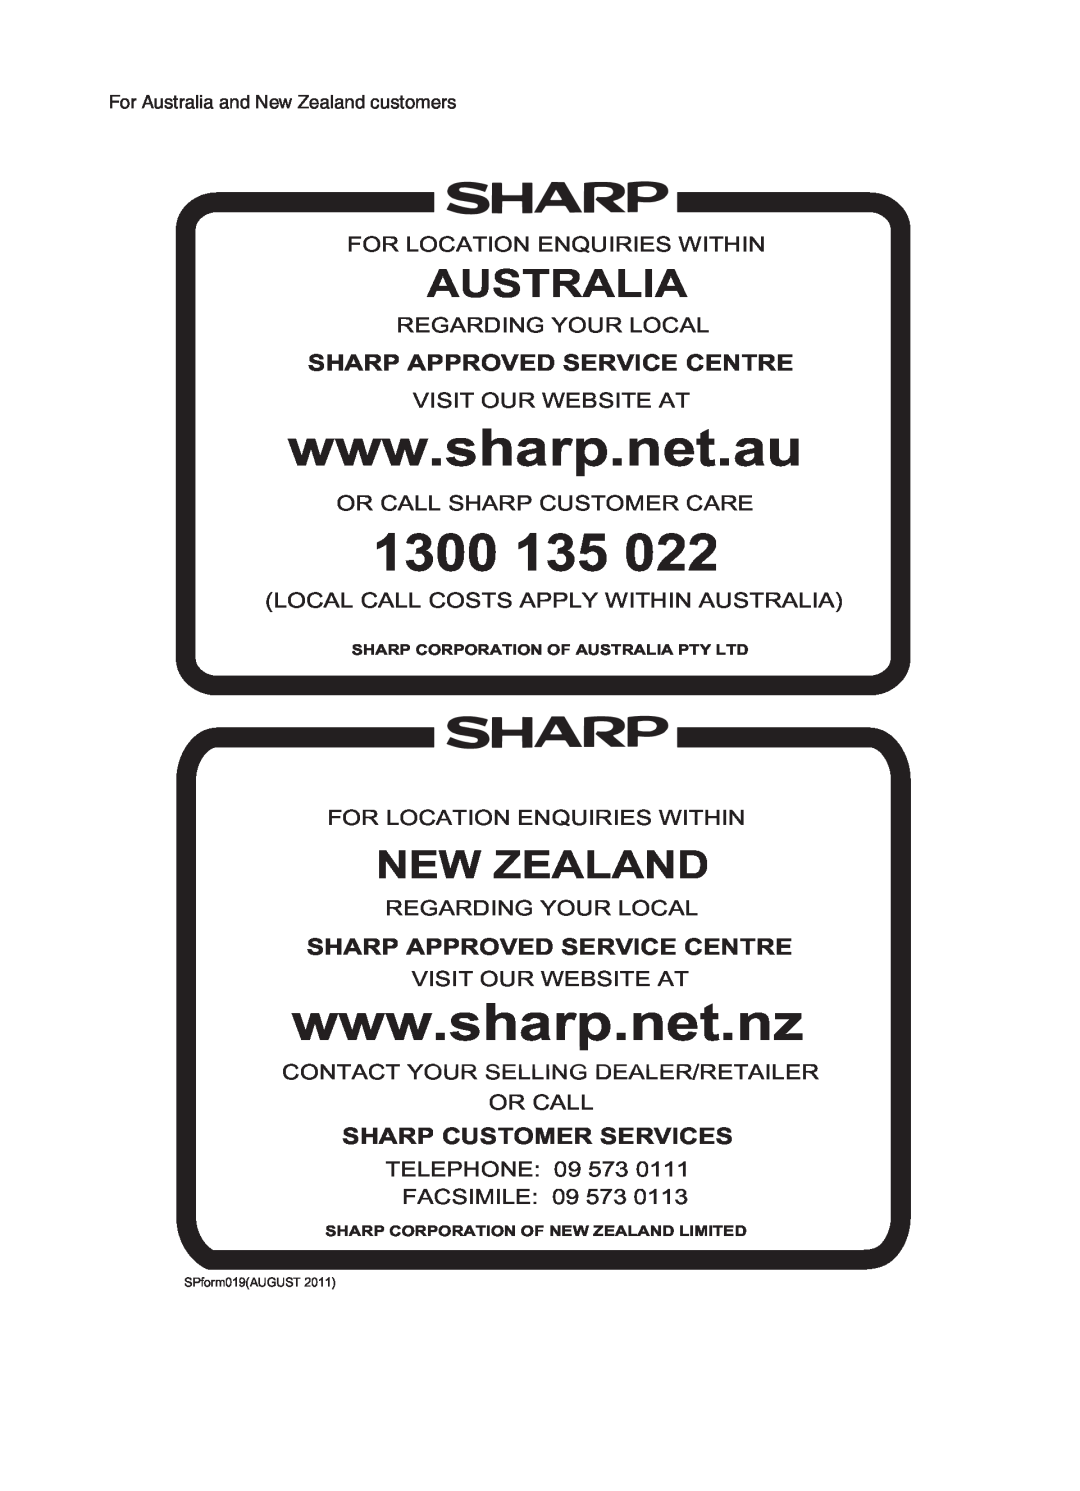 Sharp HT-SB602 operation manual 1300, Australia, New Zealand, Sharp Approved Service Centre, Sharp Customer Services 